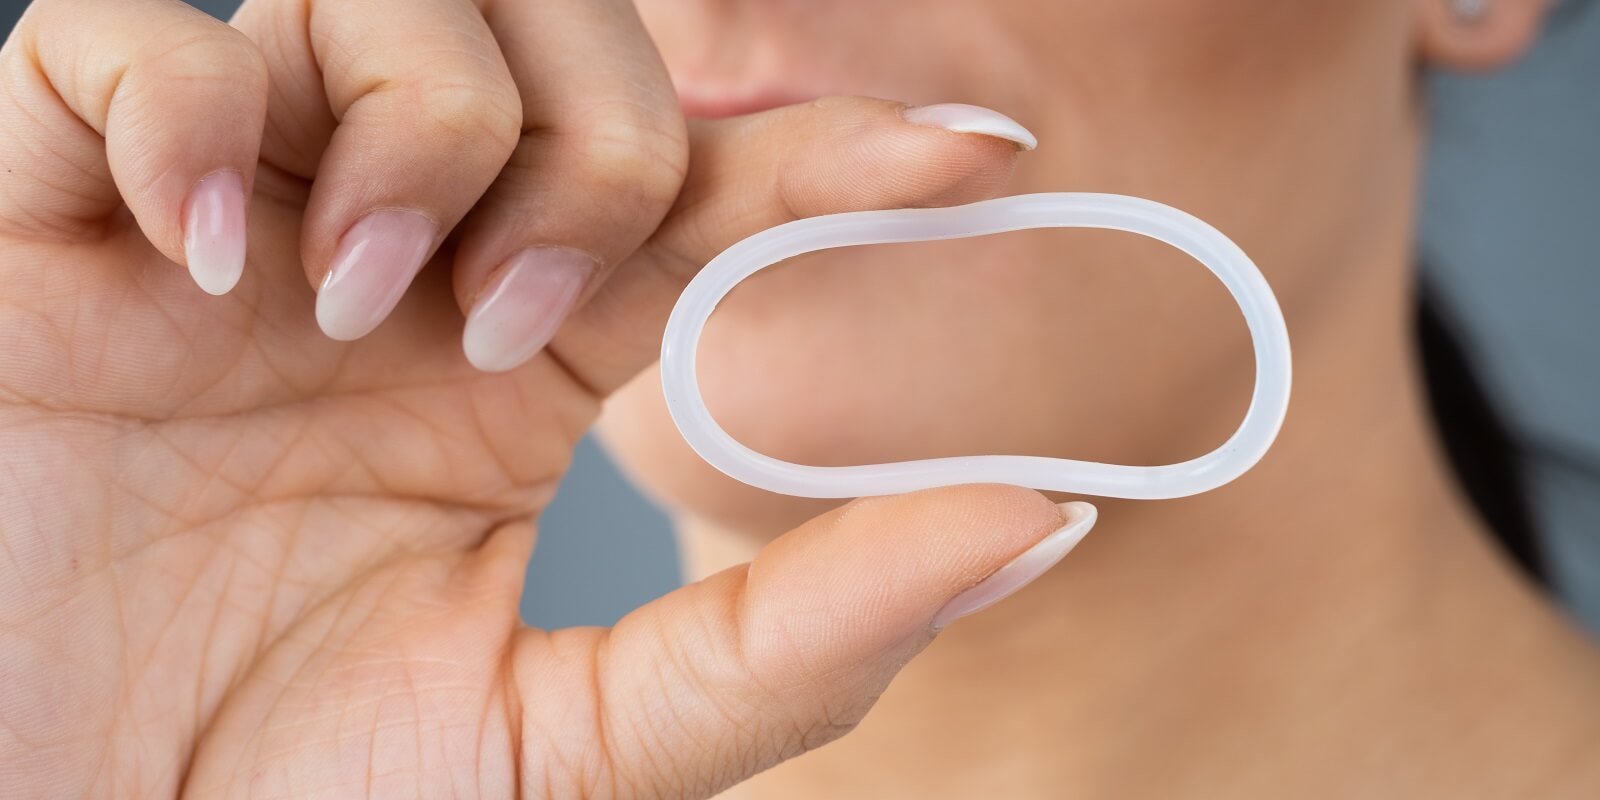 woman holding vaginal ring